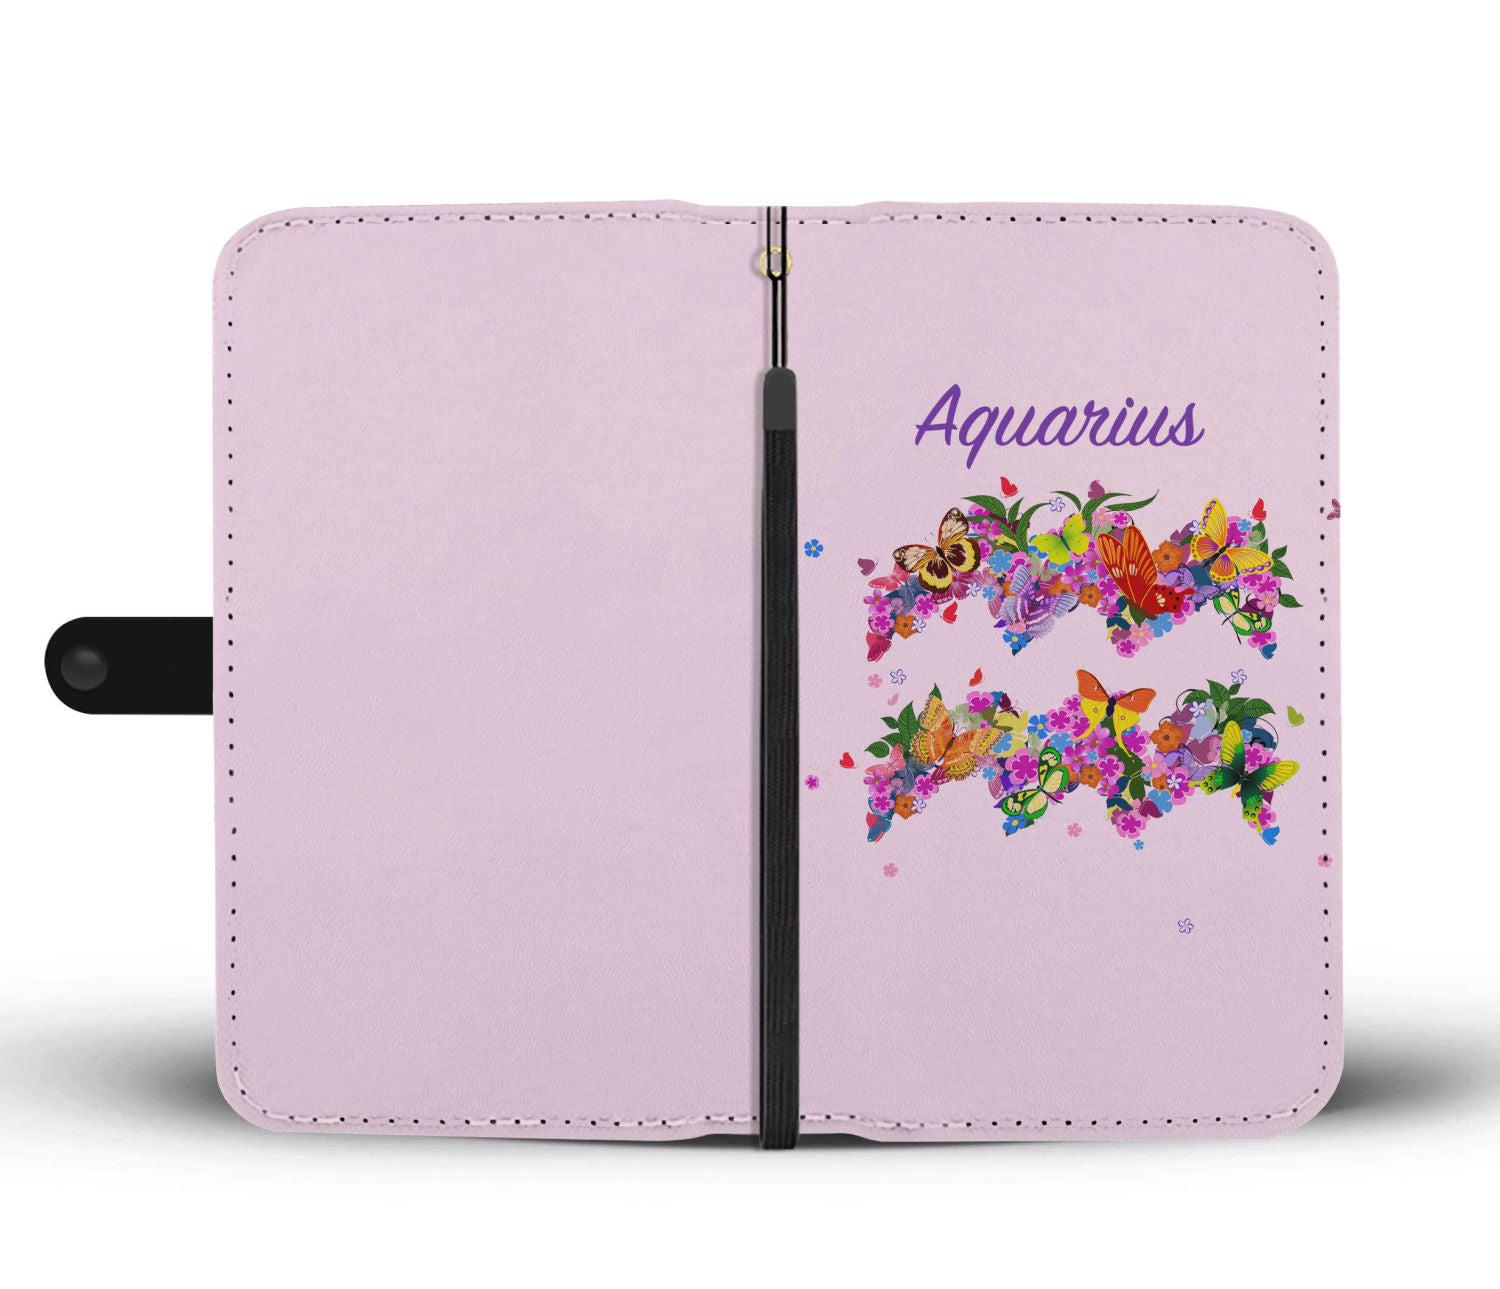 Aquarius Floral Phone Wallet